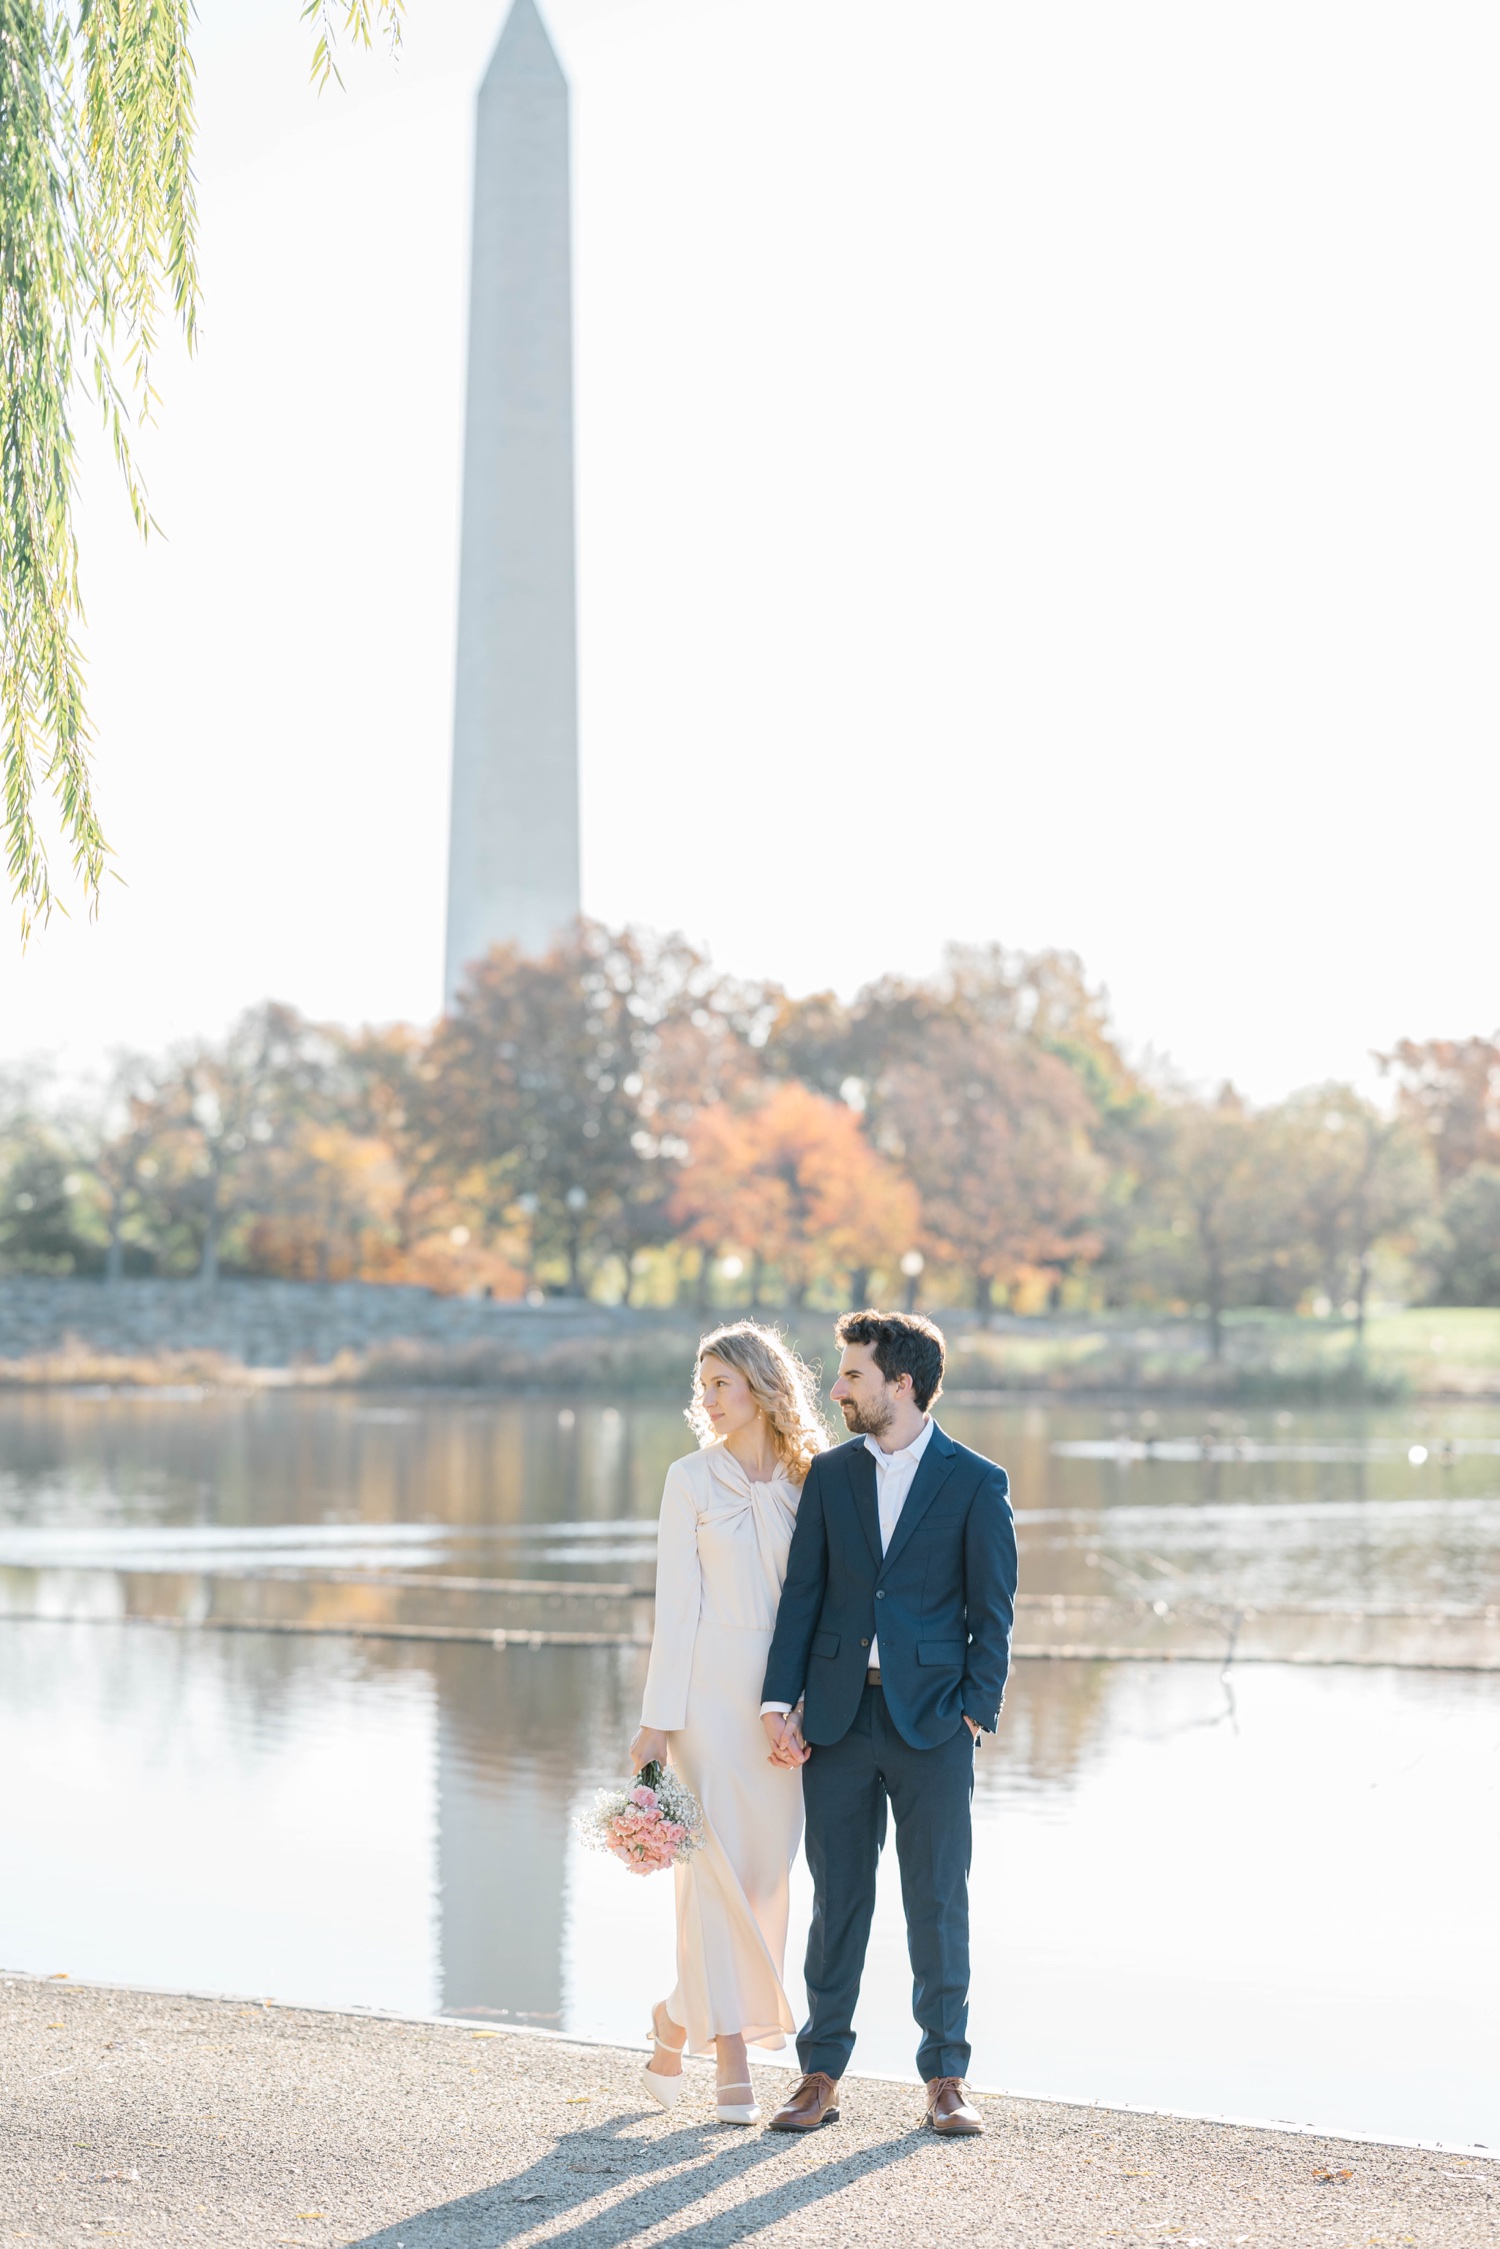 Lincoln Memorial Engagement Photos in Washington DC